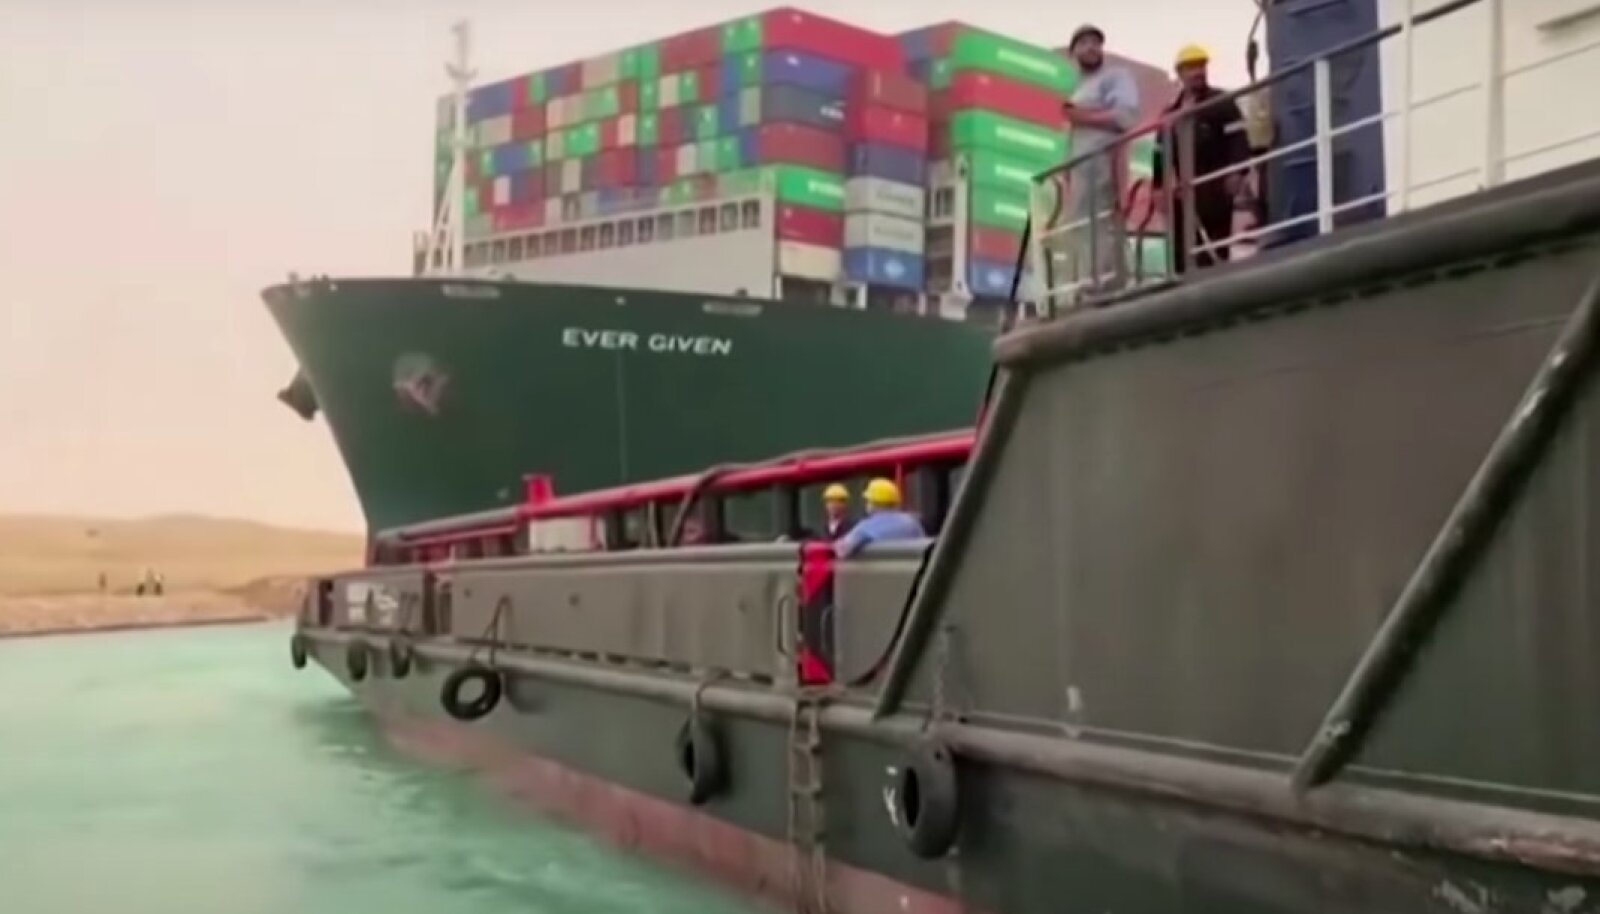 12 влекача вадят заседналия кораб в Суецкия канал СНИМКИ